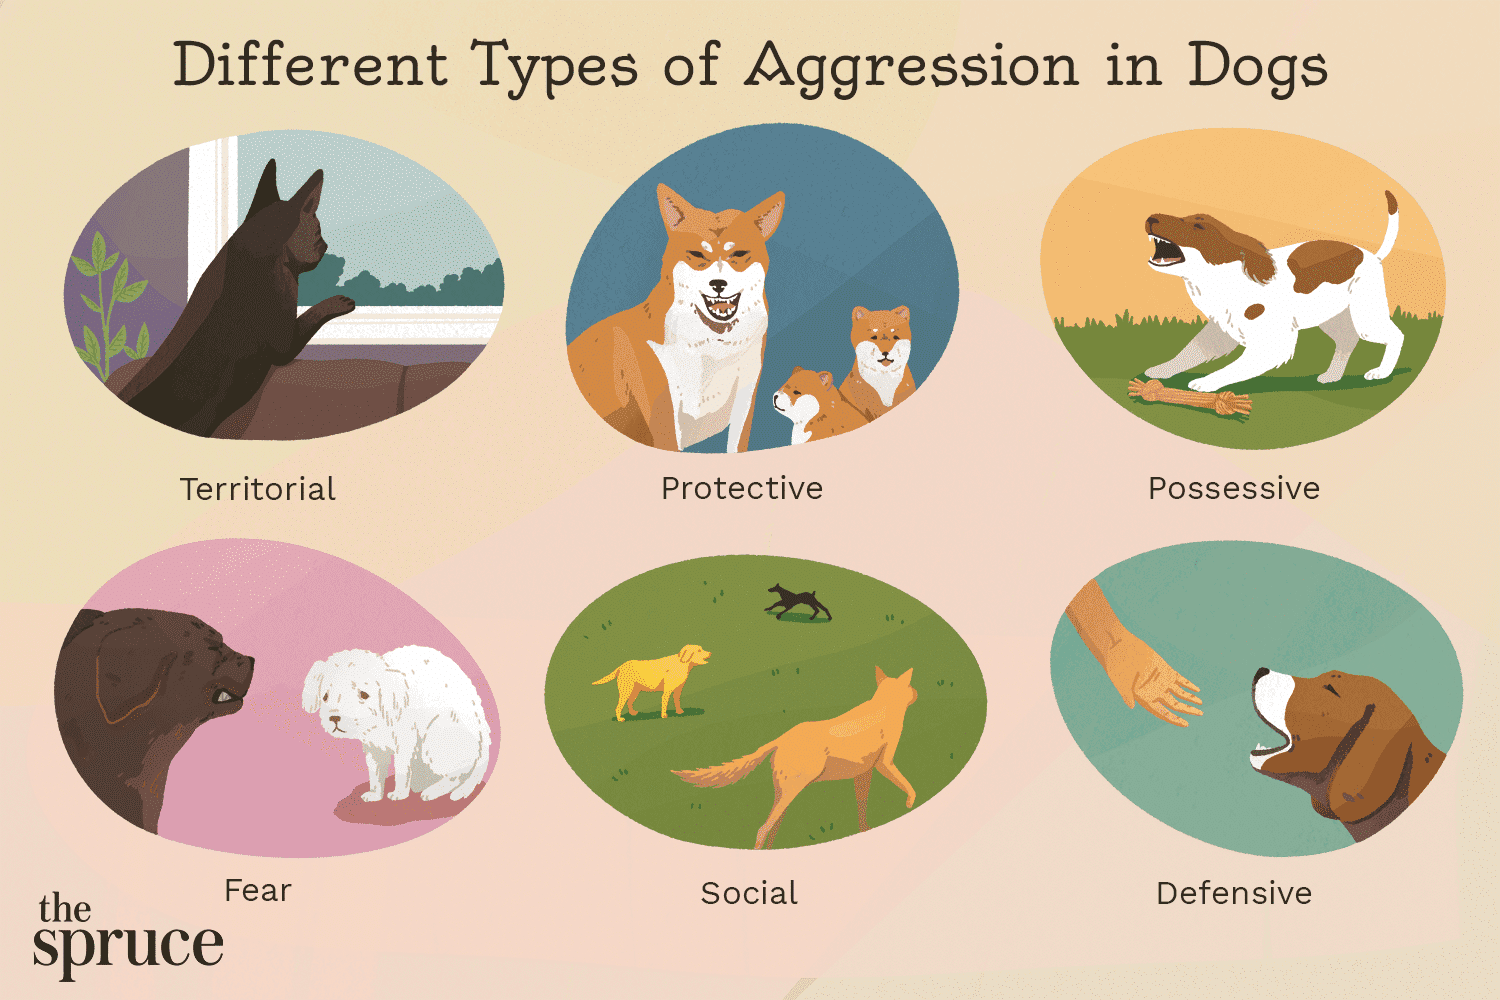 aggressive-dog-behavior-2